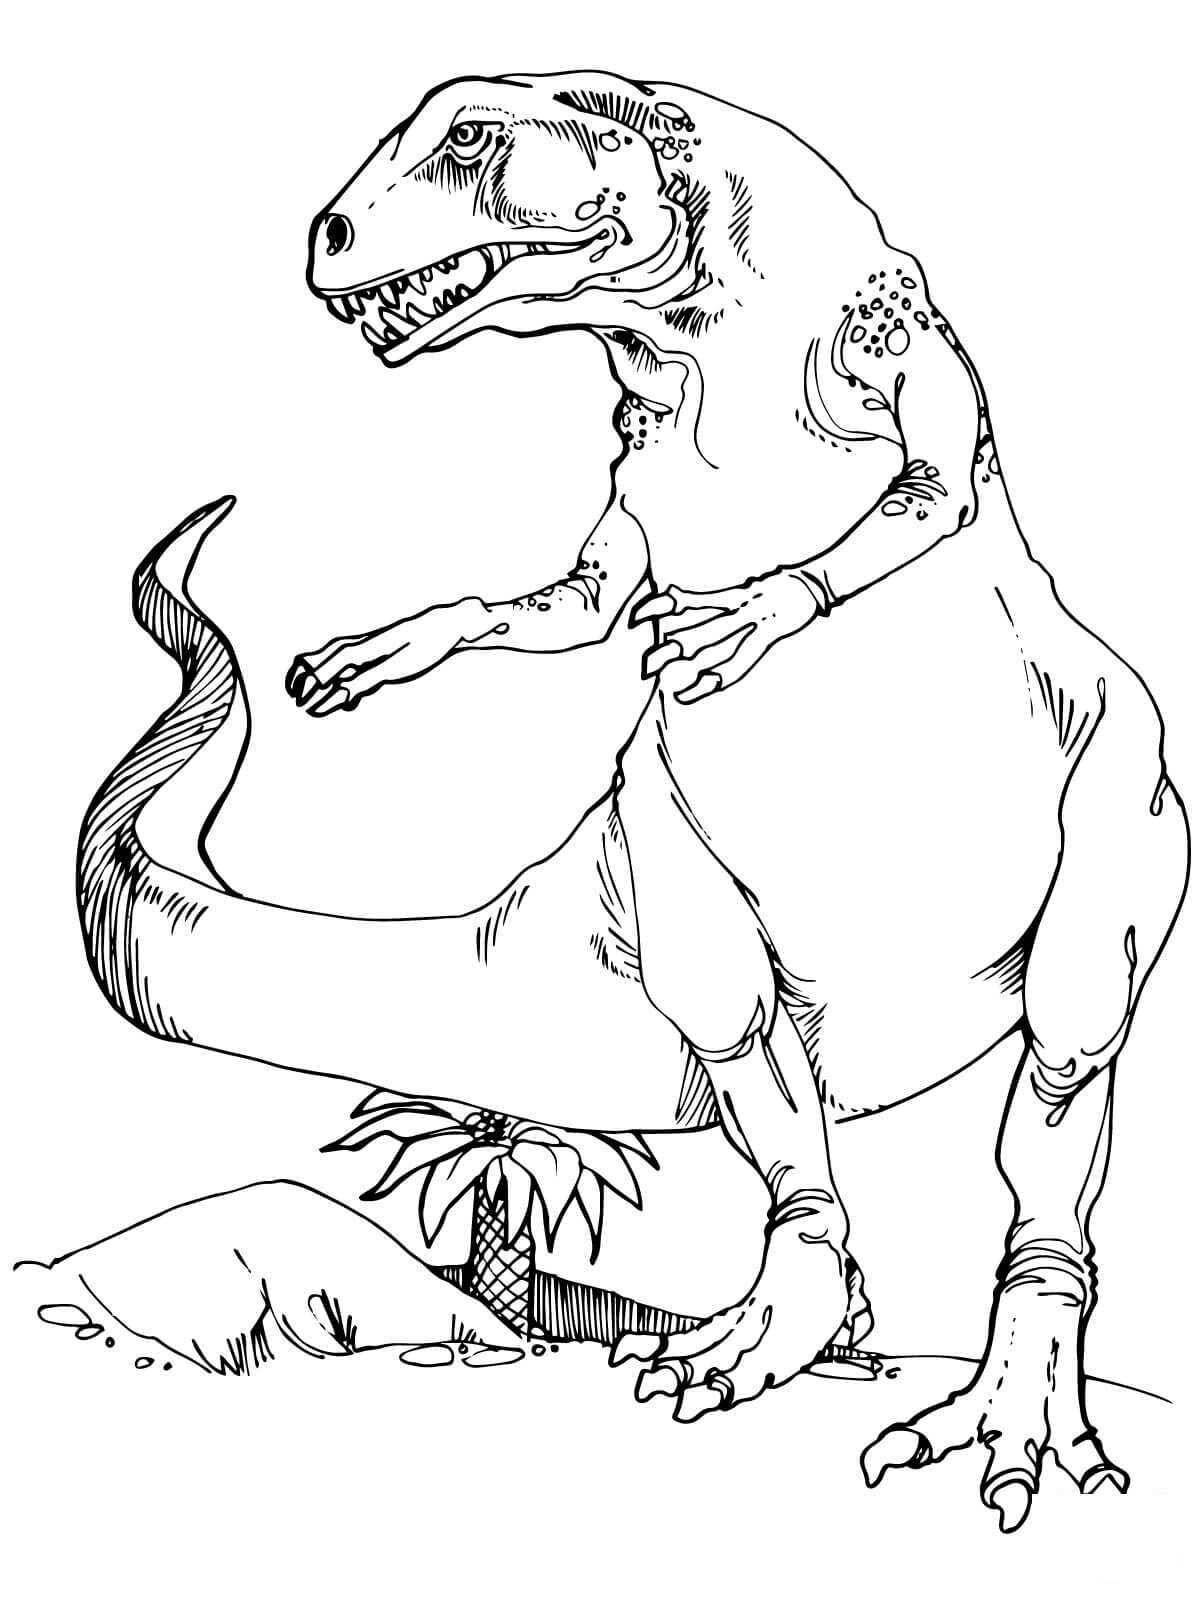 Teratosaurus Dinosaur standing up Coloring Page